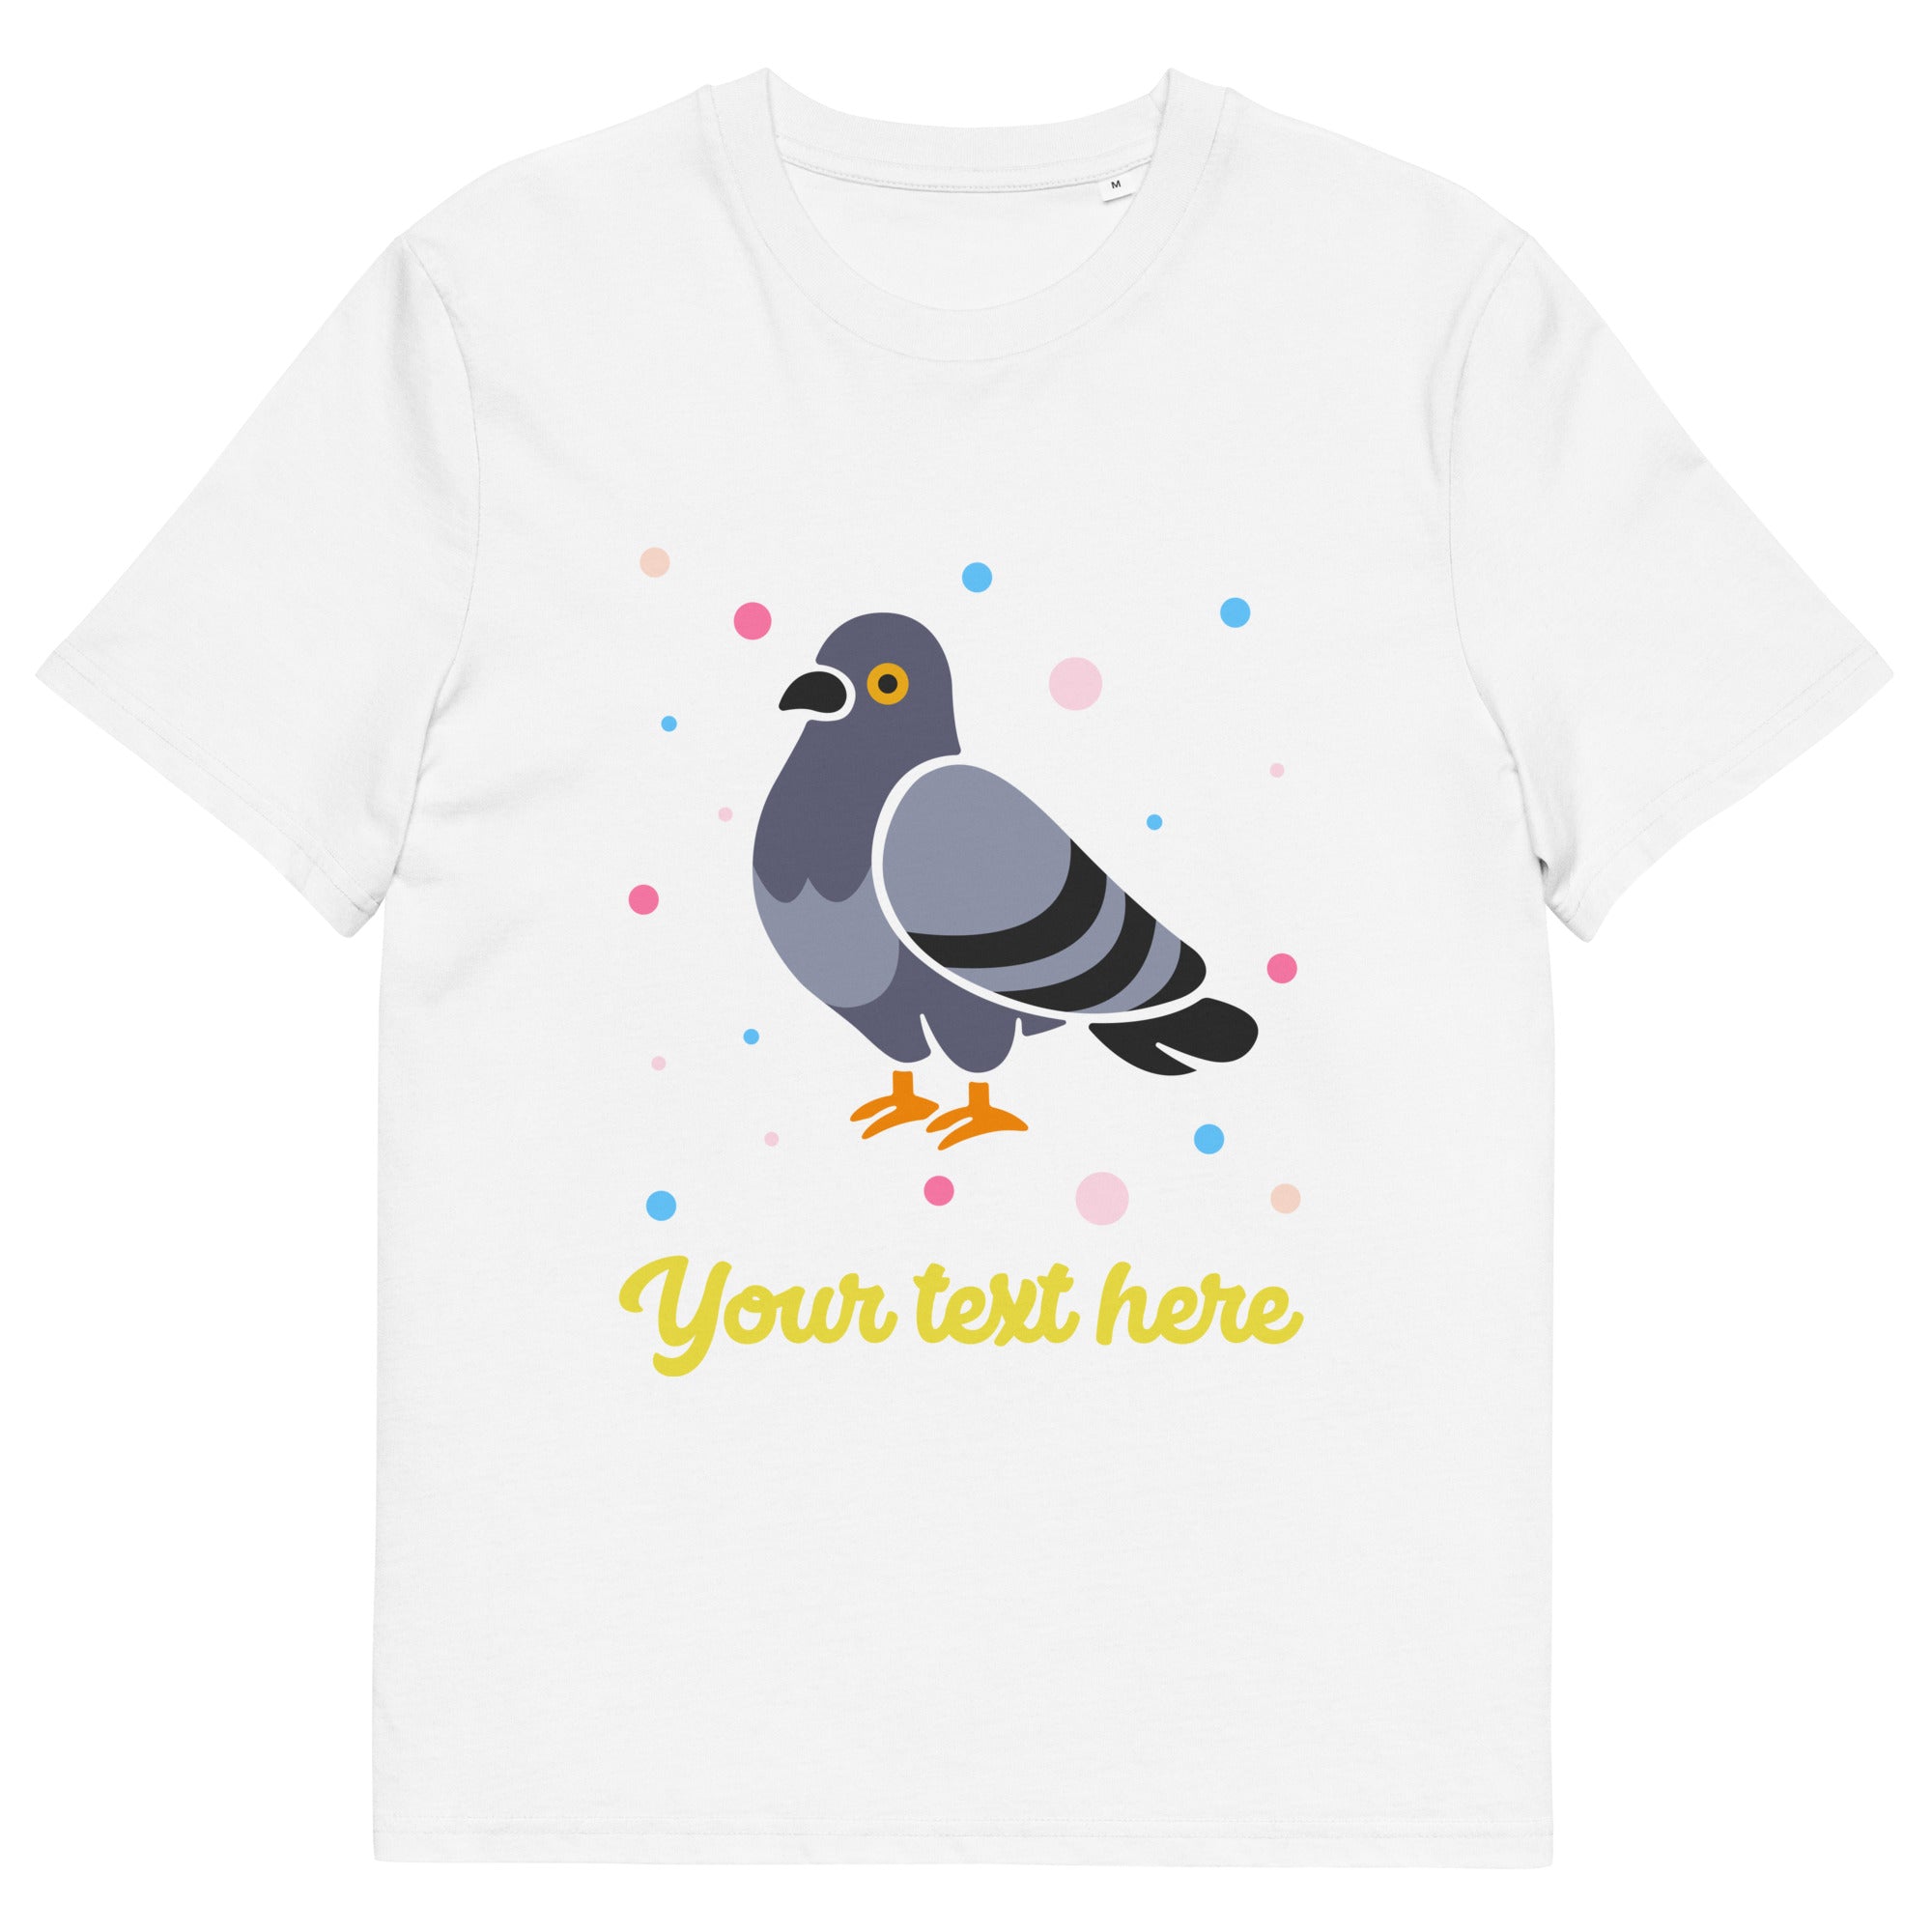 Personalised Custom Text - Organic Cotton Adults Unisex T-Shirt - London Doodles - Pigeon